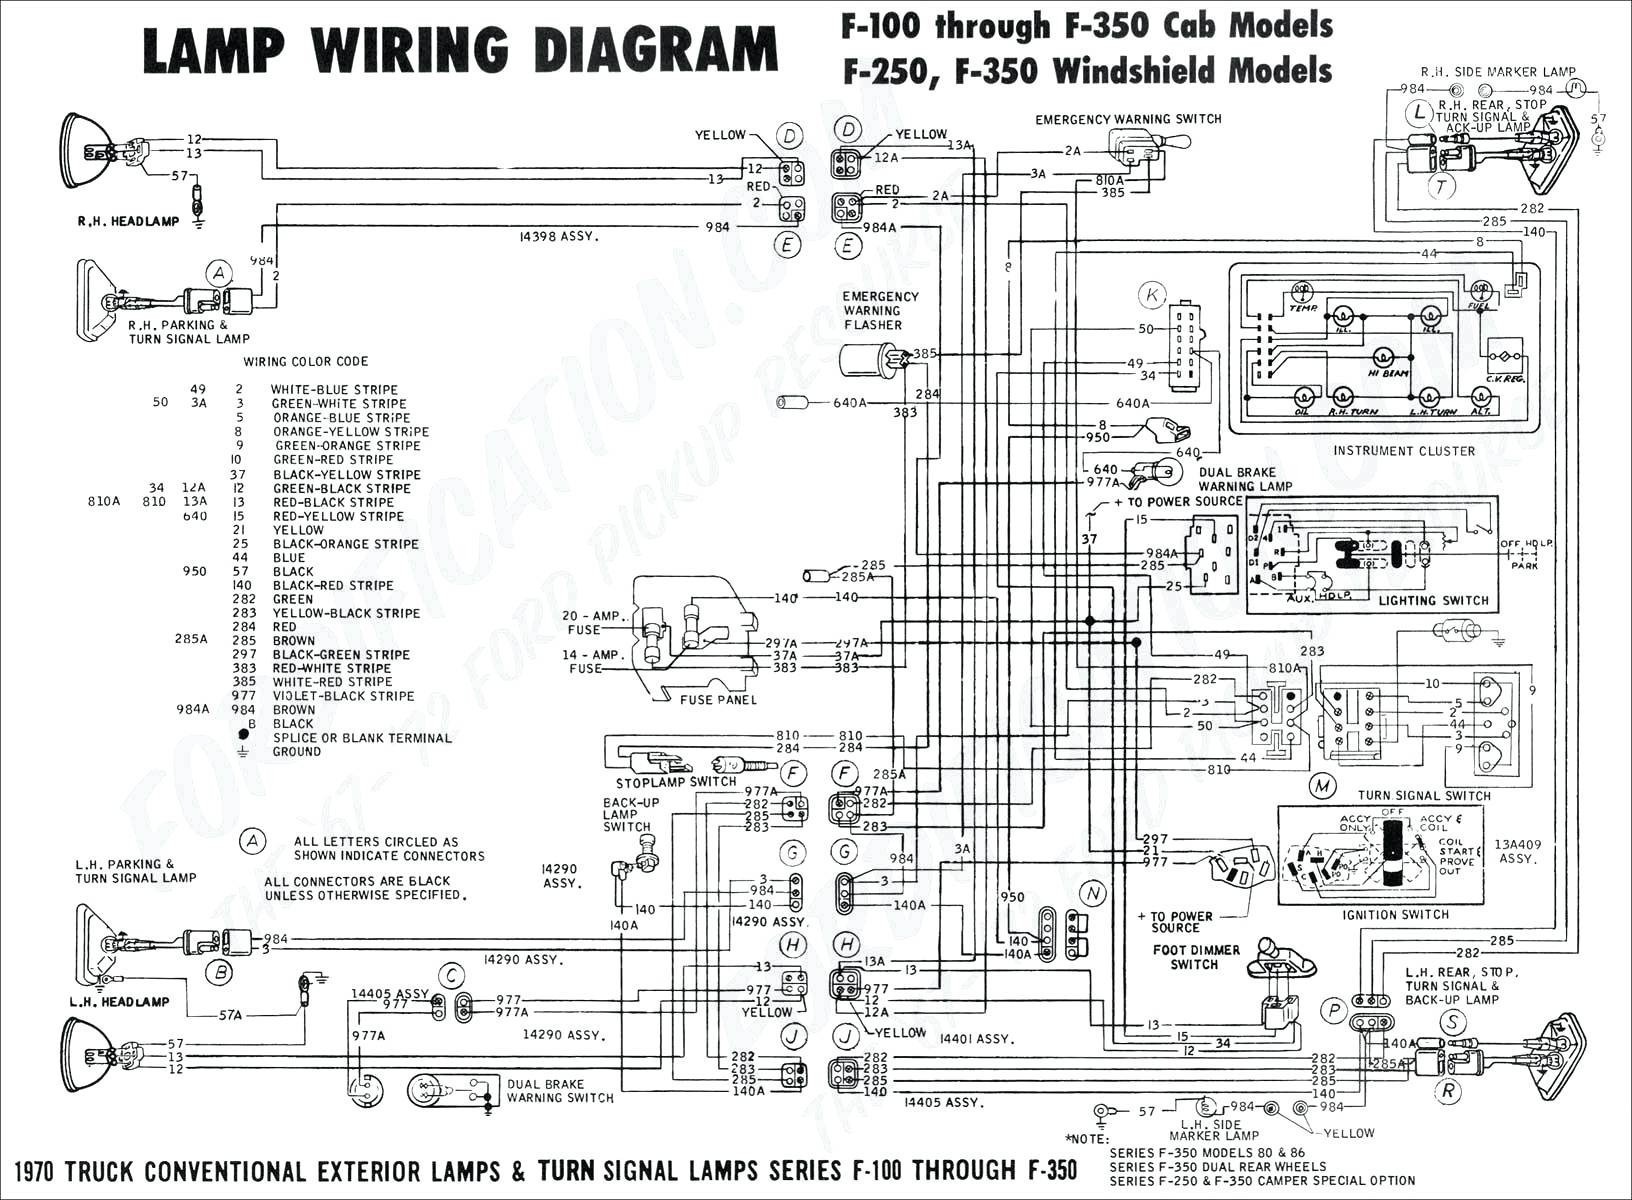 2010 Mini Cooper Fuse Diagram Wiring Diagram For You Dyna Turn Signal Wiring Diagram